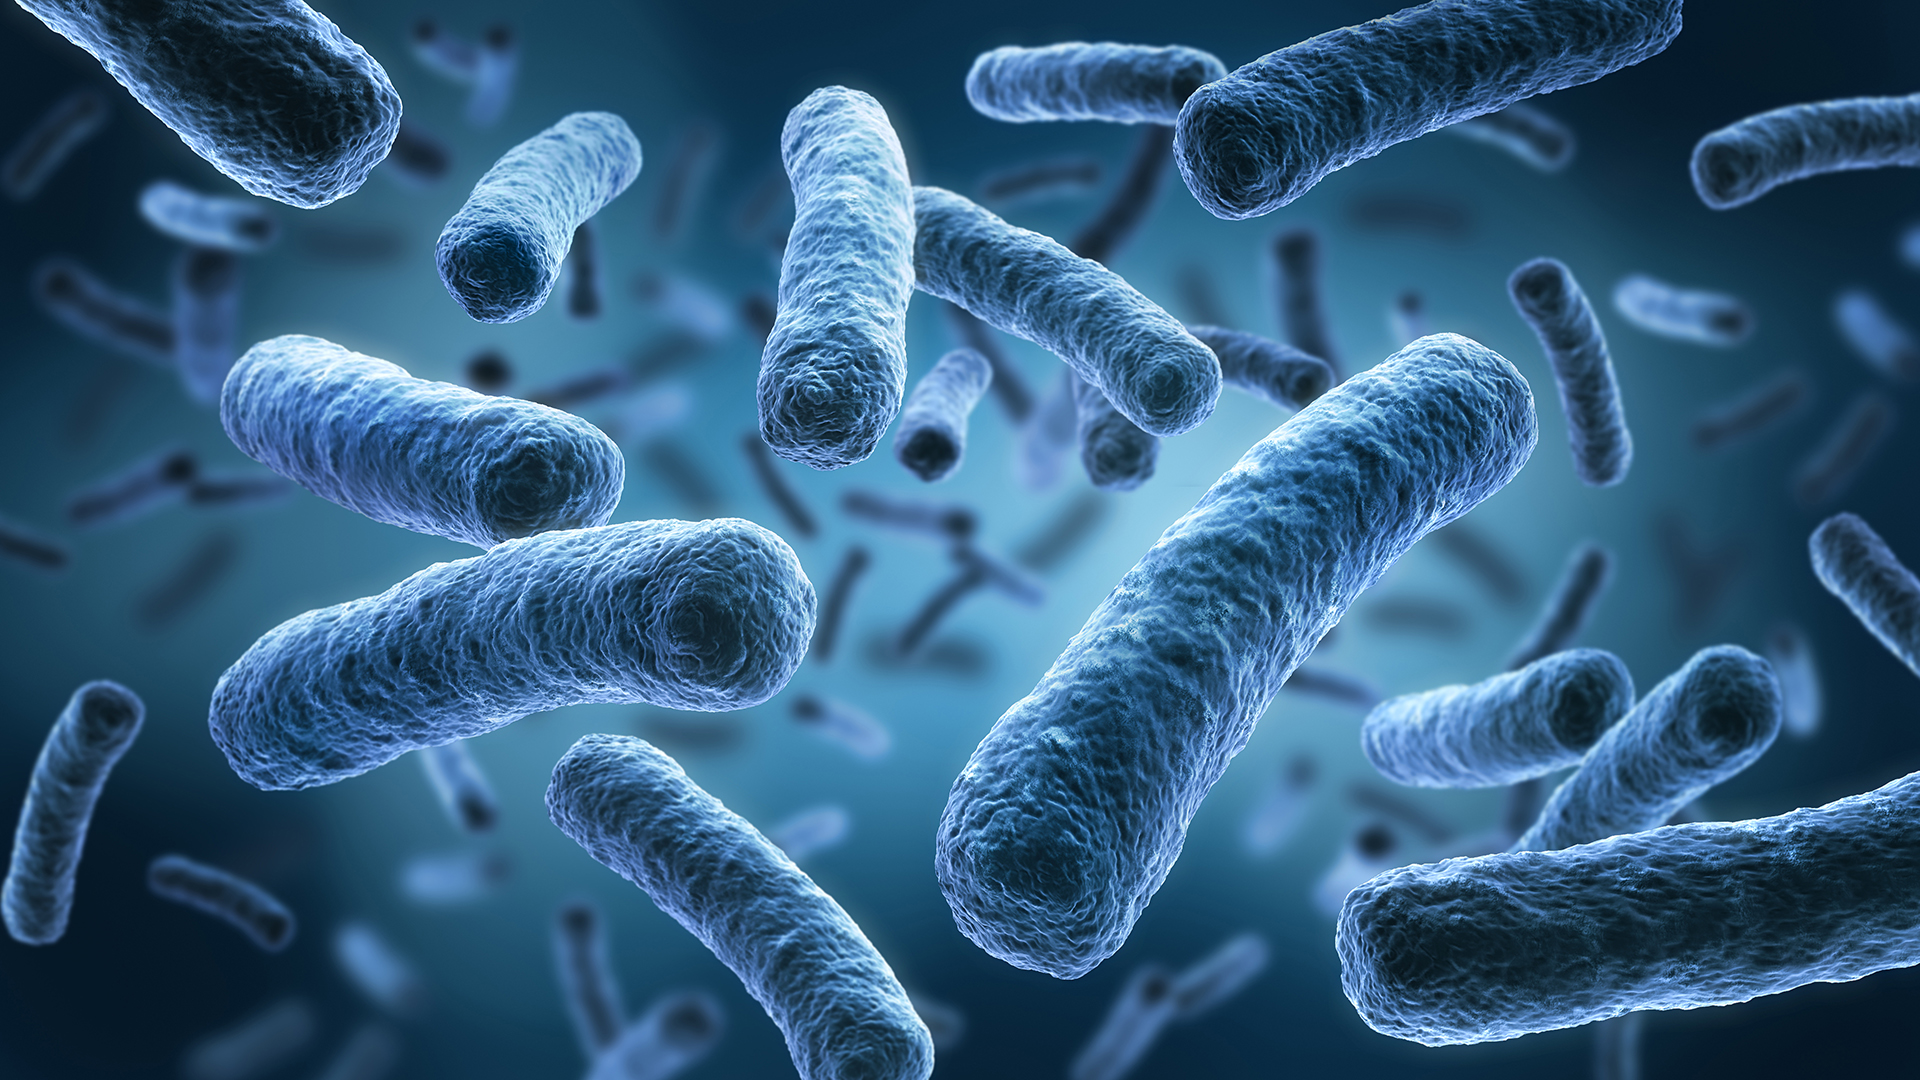 Perseverant bacteria are weakening antibiotic treatment